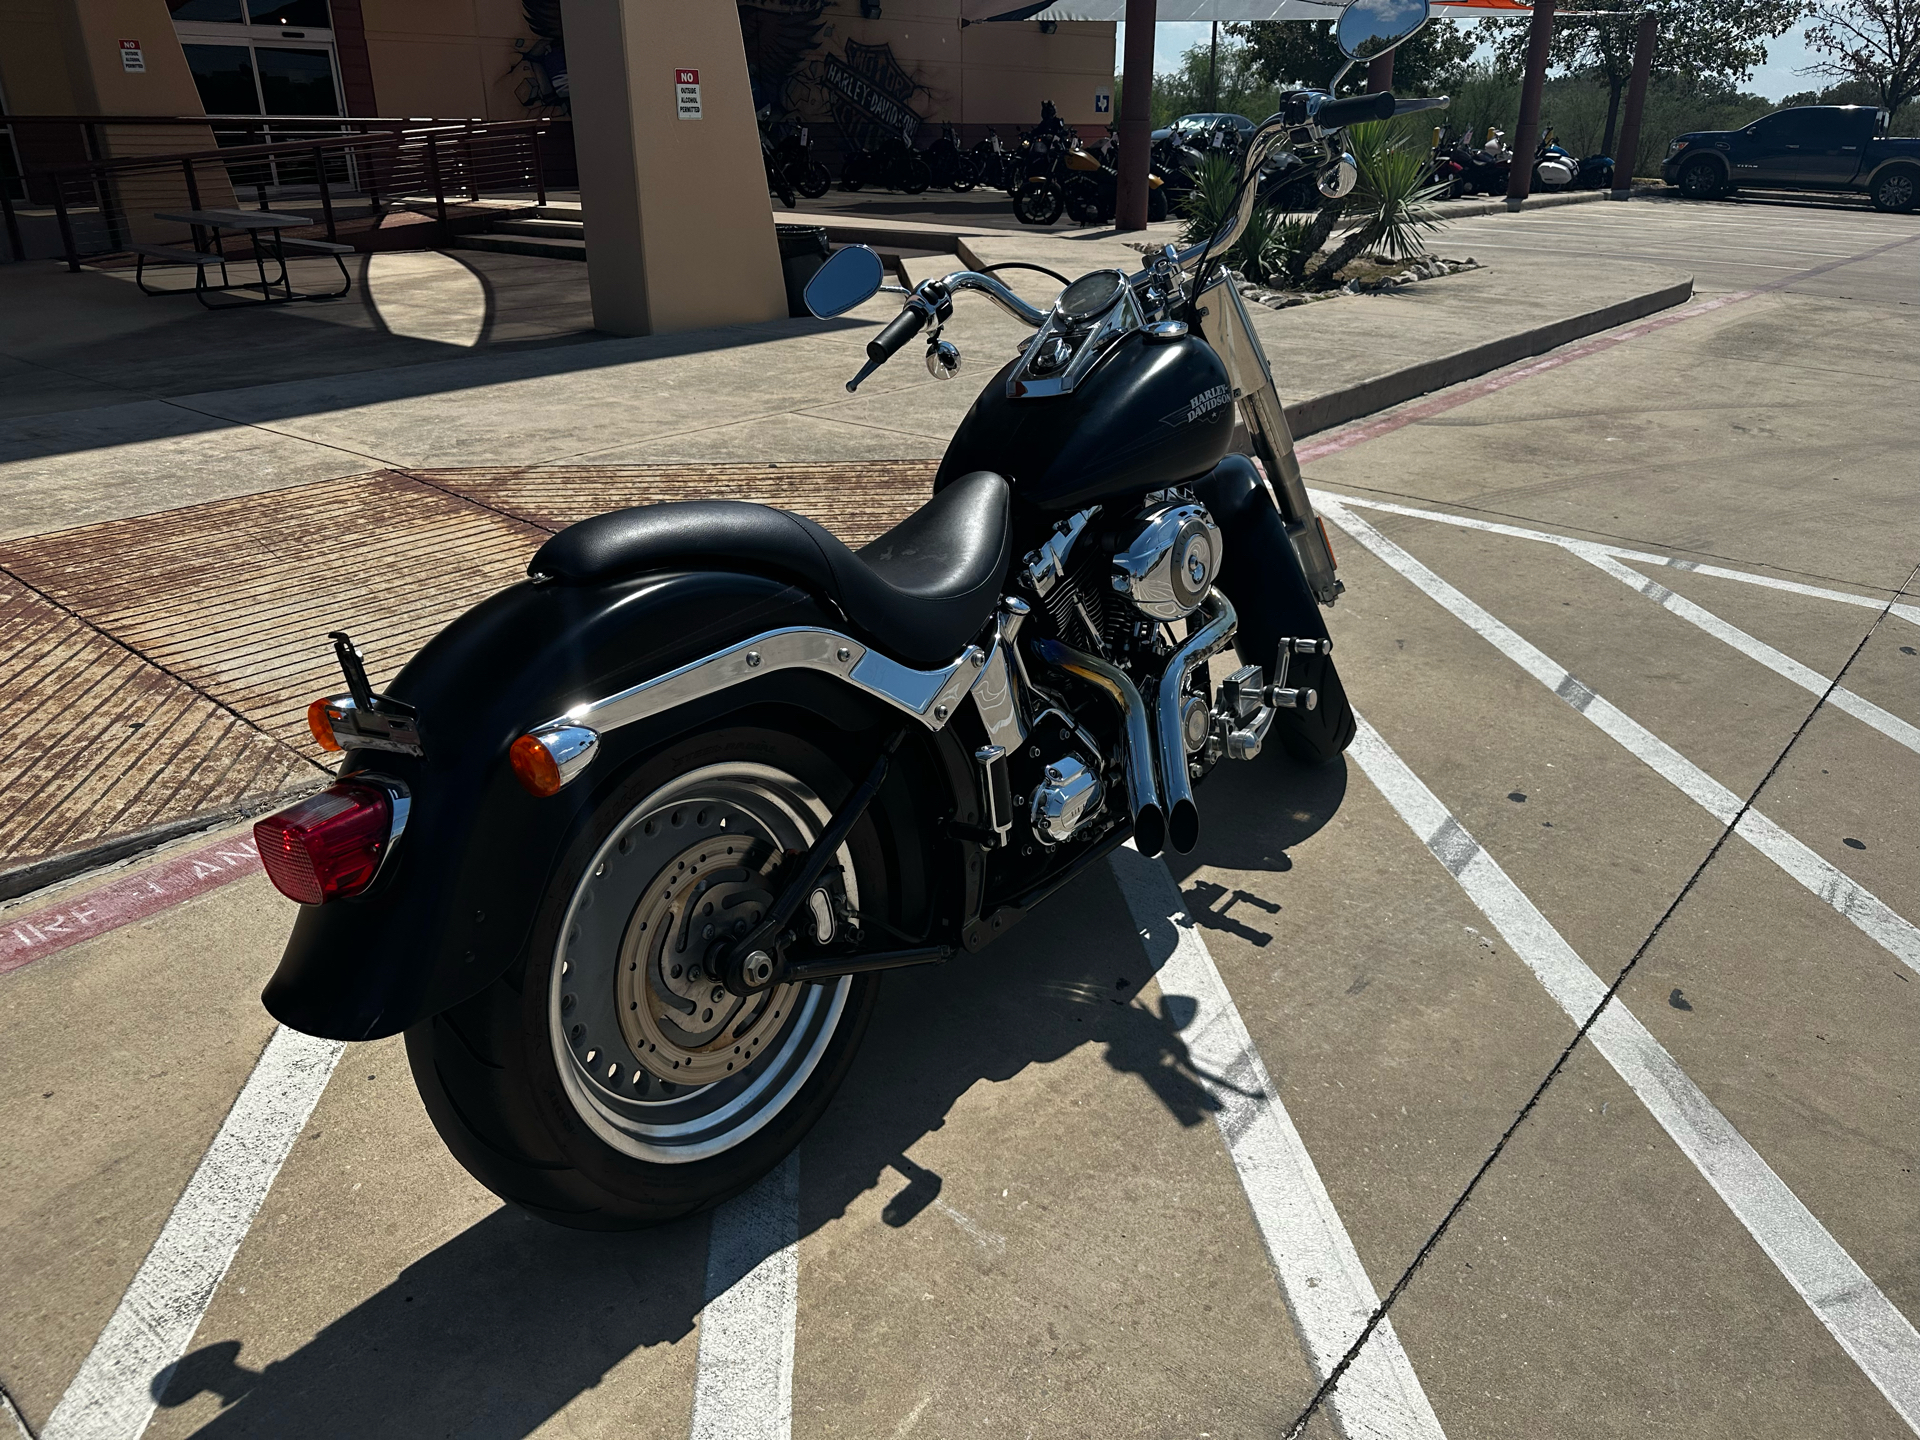 2009 Harley-Davidson Softail® Fat Boy® in San Antonio, Texas - Photo 8